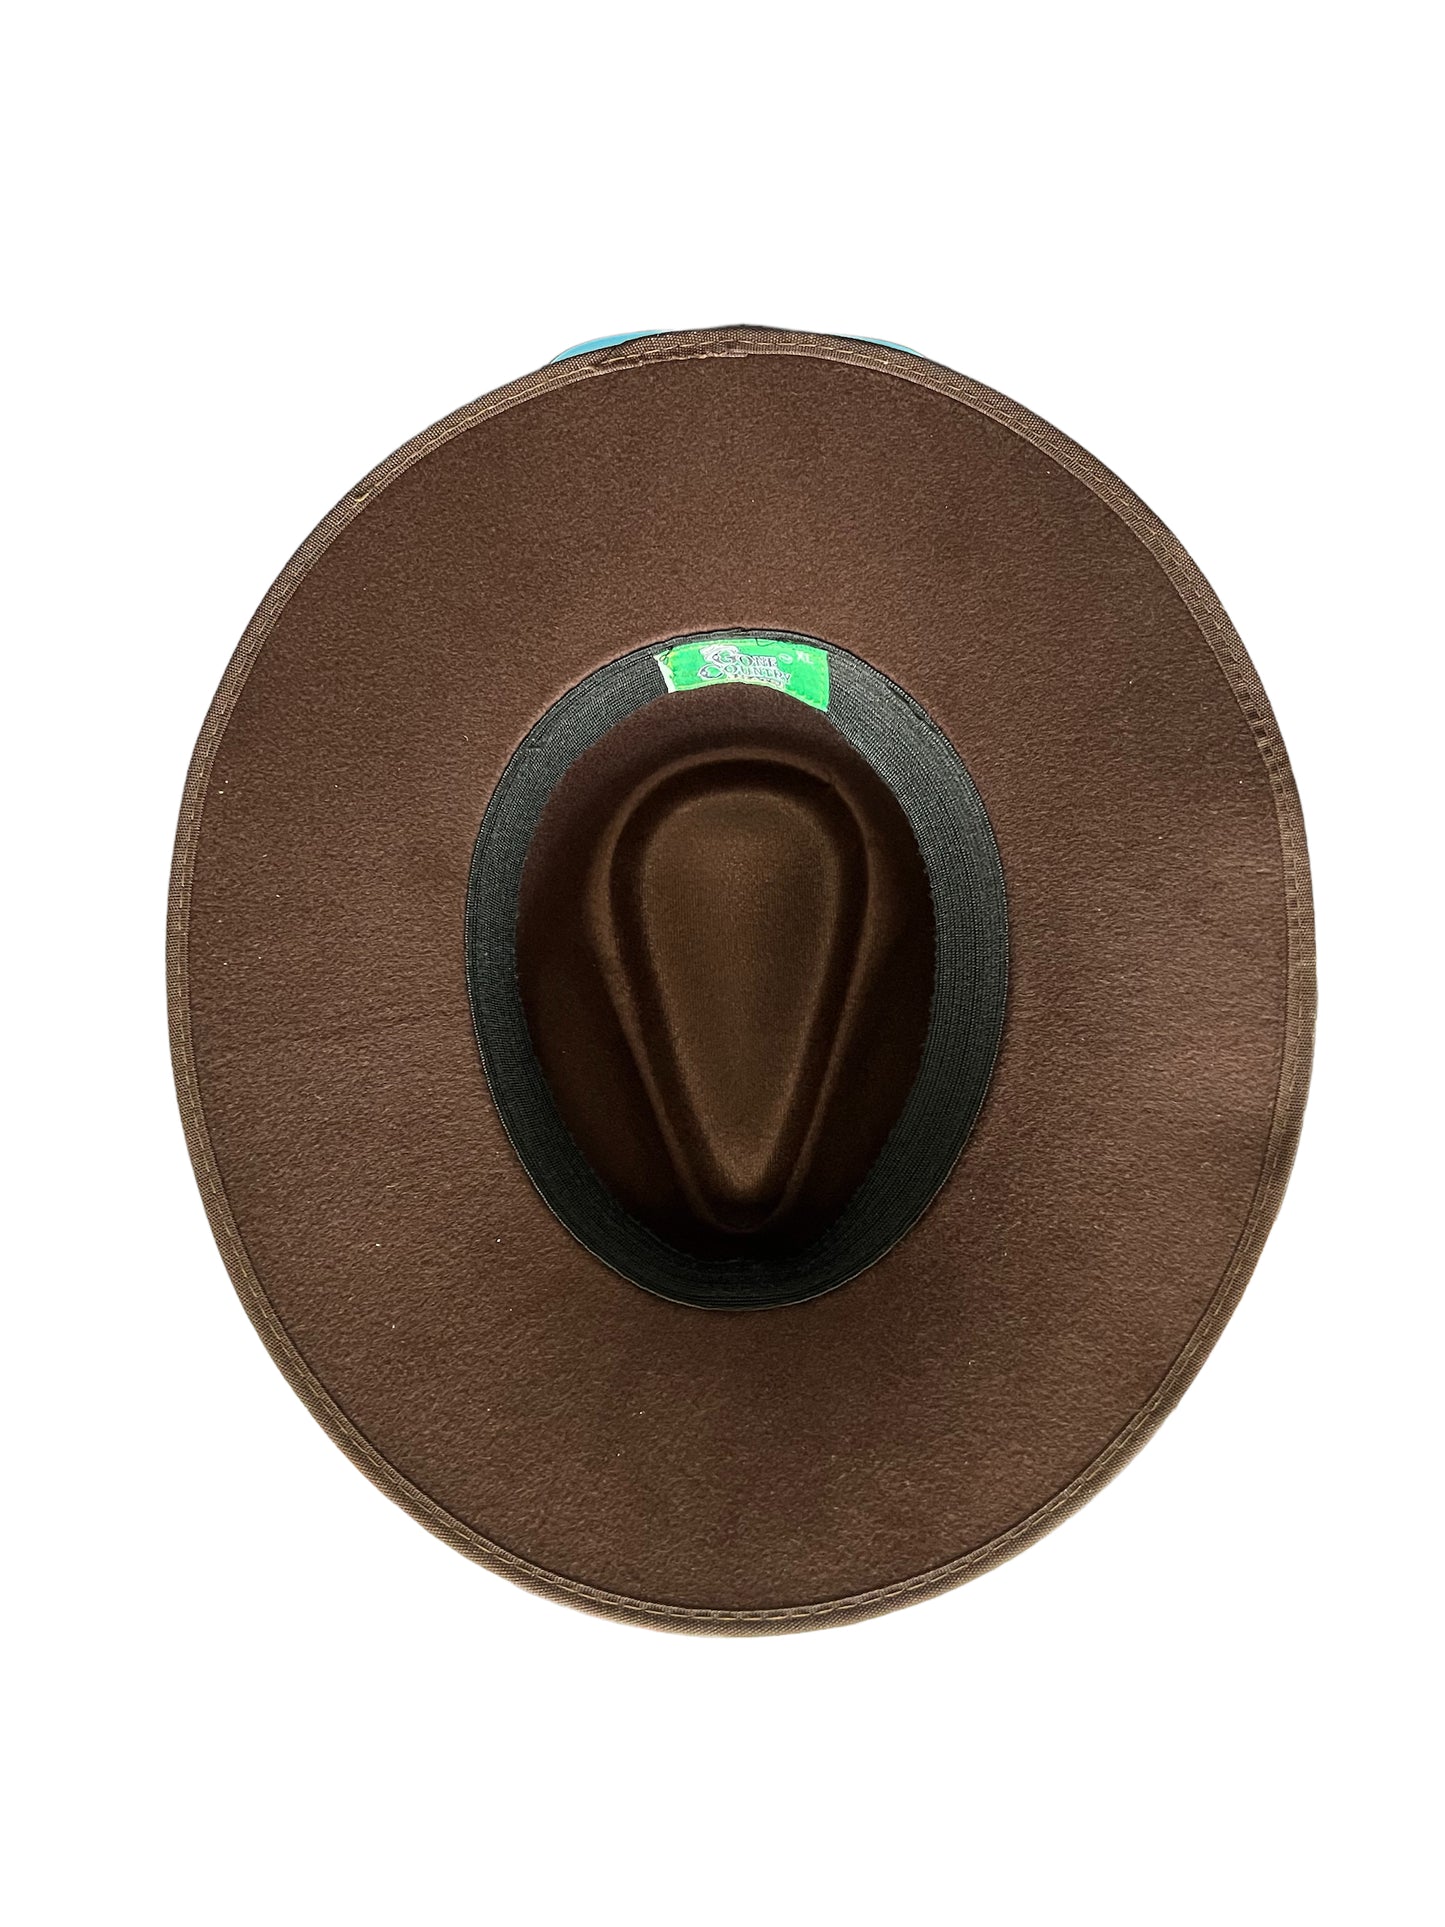 Flex sweatband in a flat brim cowboy hat